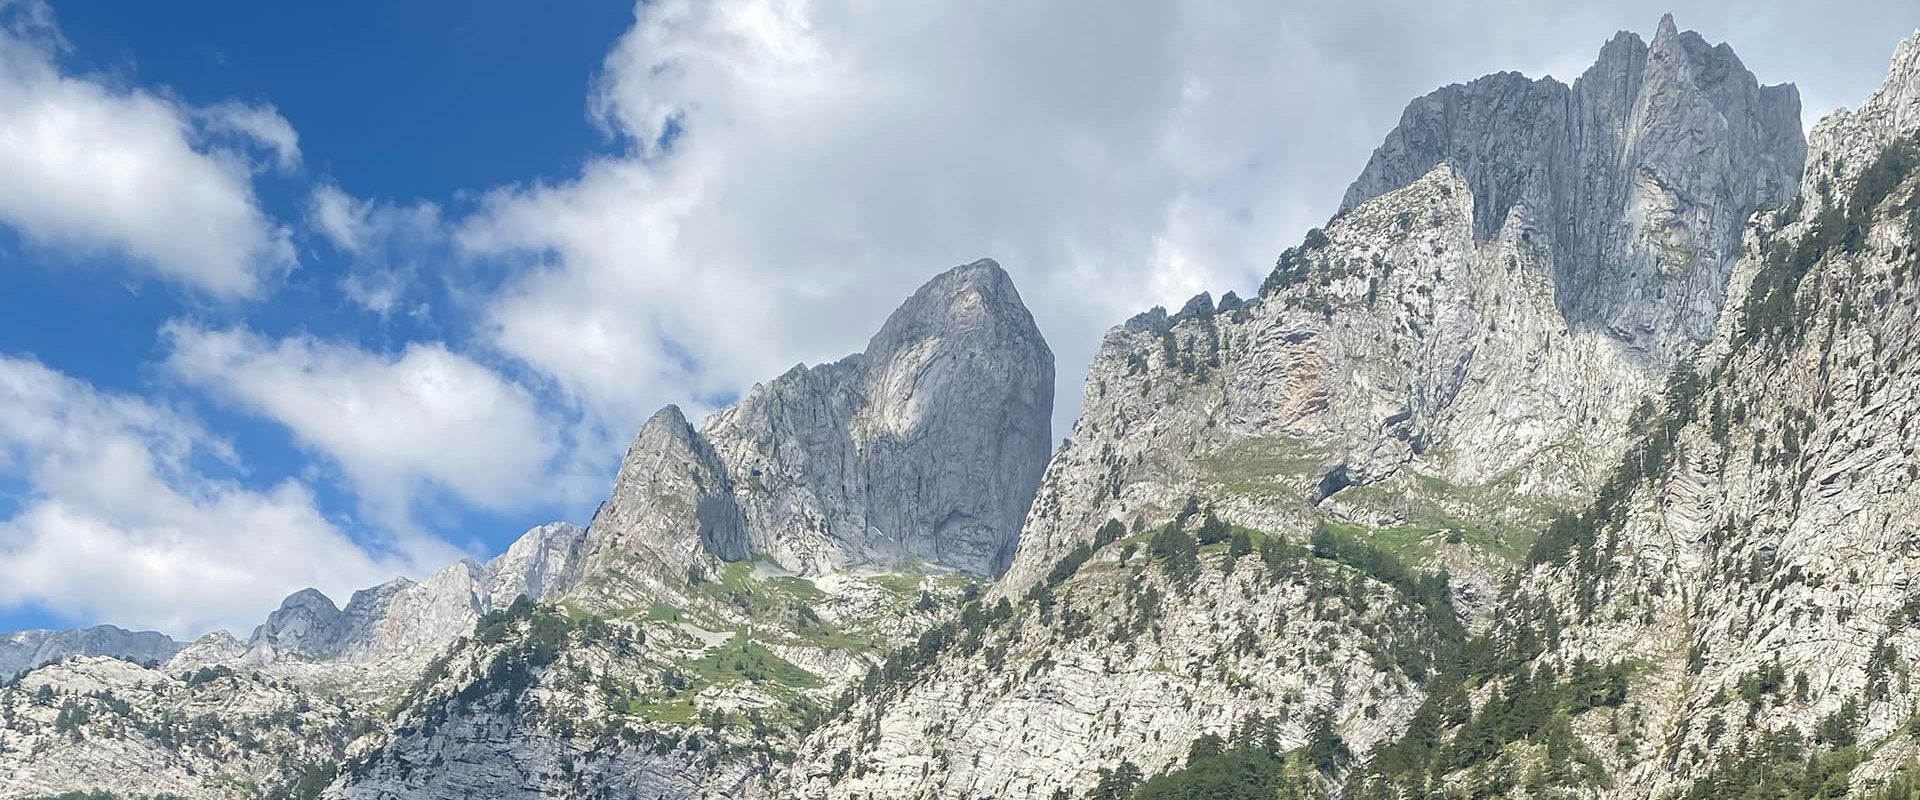 Mountain peaks in Albania